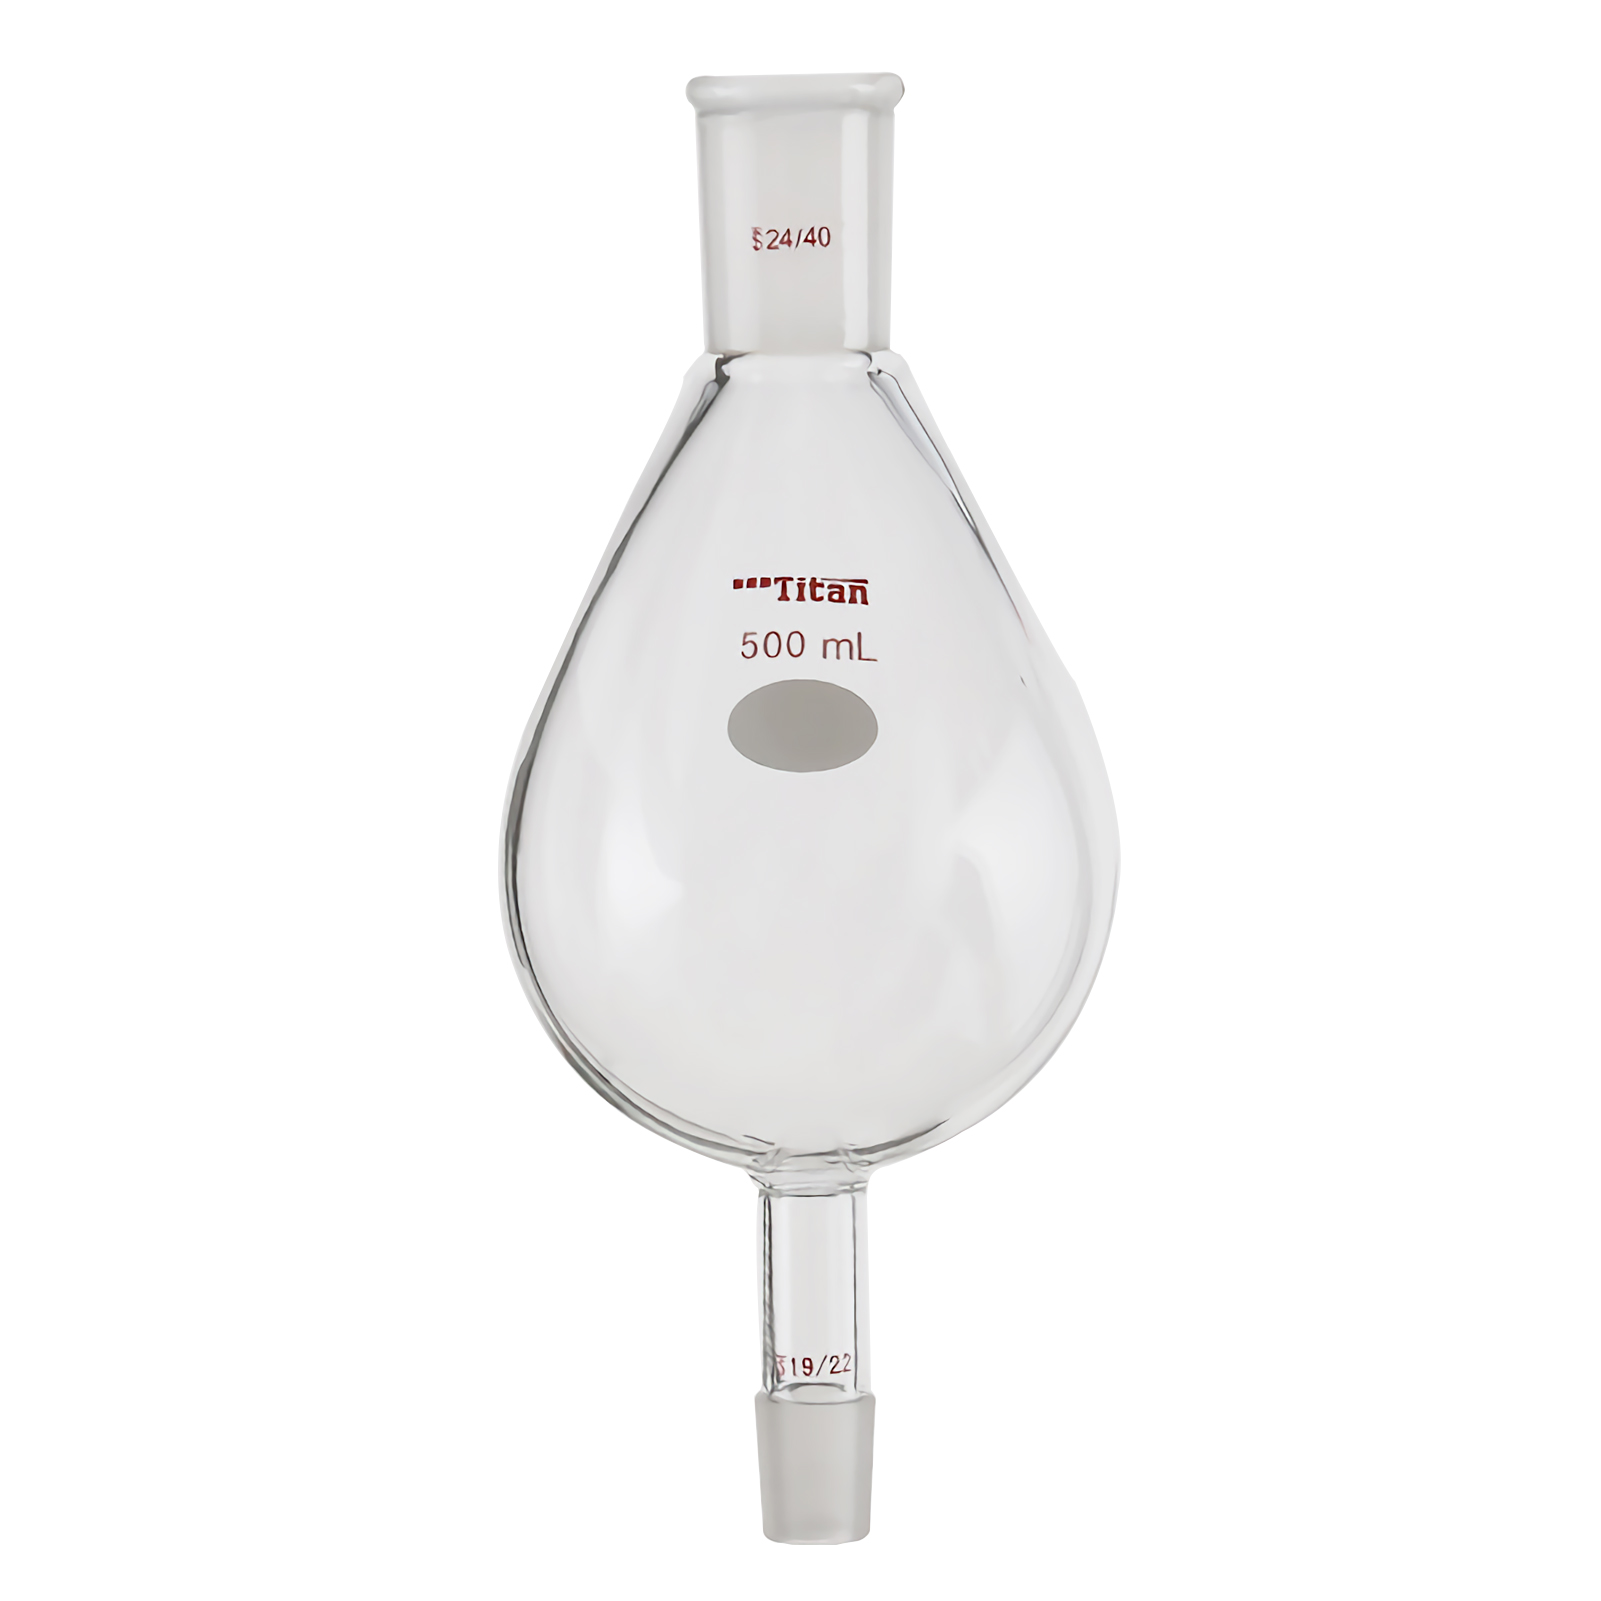 ADAMAS BETA 1pcs Kuderna-Danish Flask with 24/40 Upper Joint 19/22 Bot